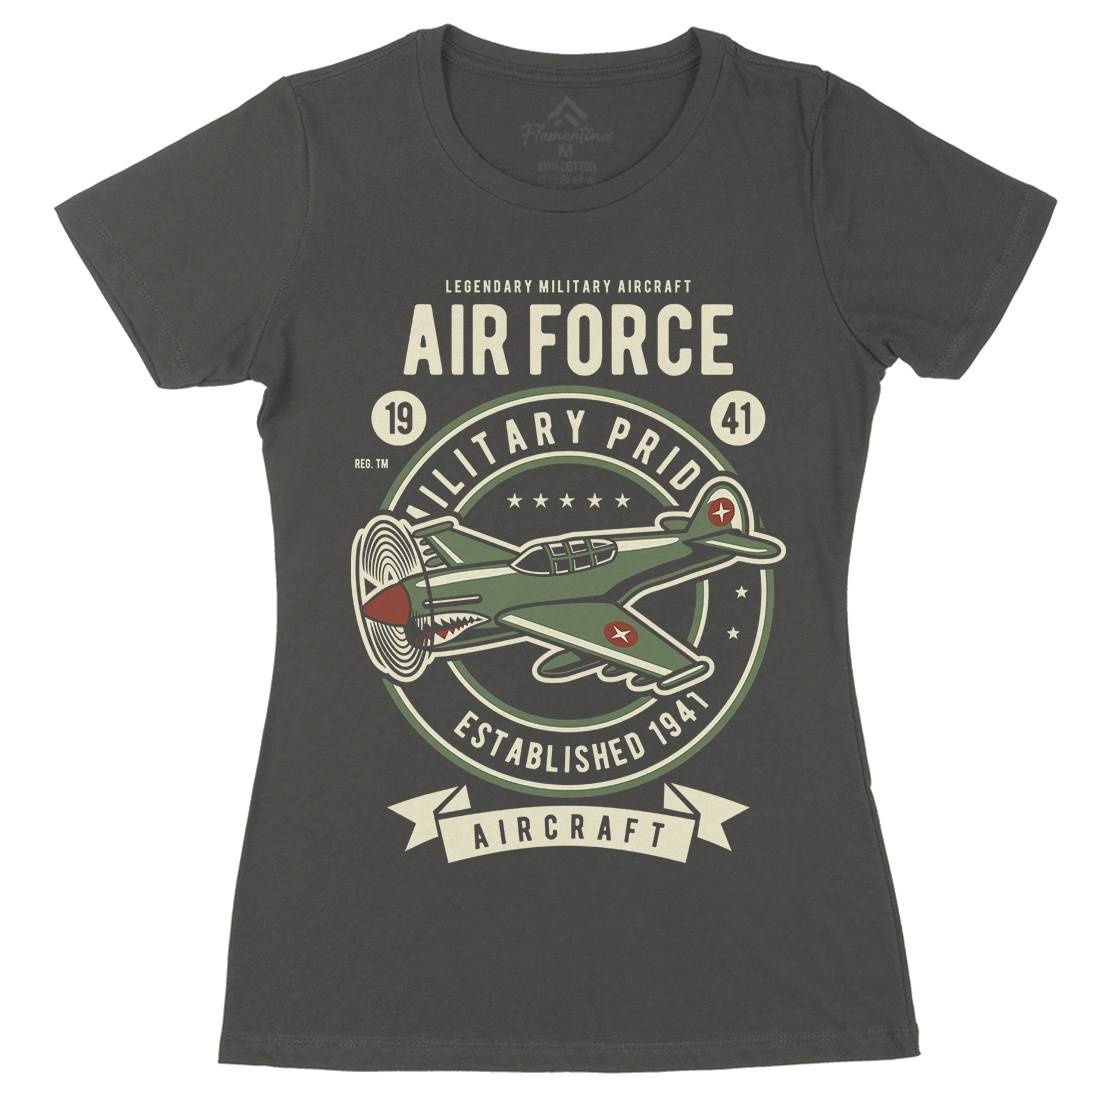 Air Force Womens Organic Crew Neck T-Shirt Army D502